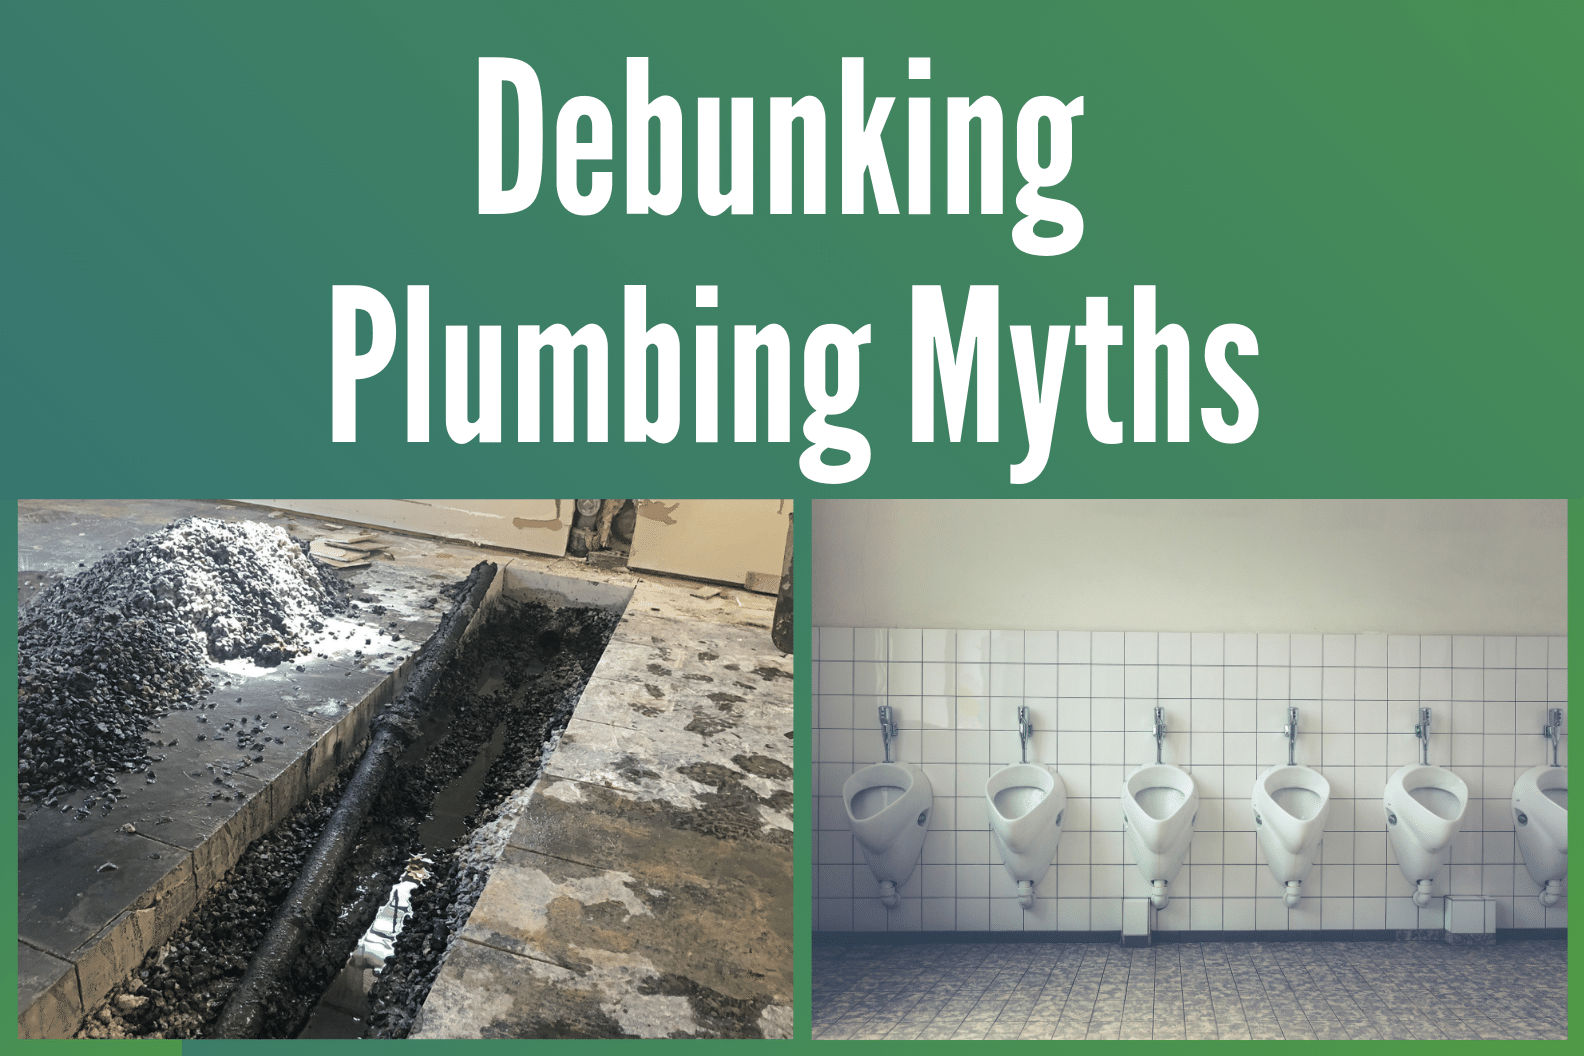 Plumbing Myths